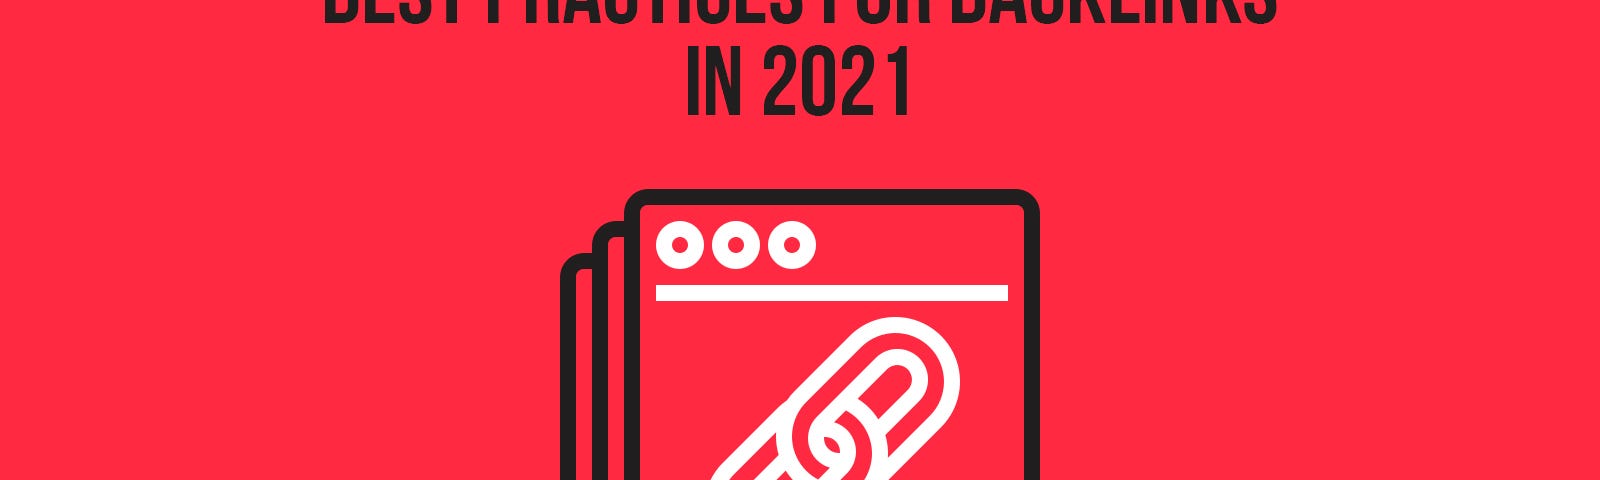 Backlinks, Best Practices, 2021